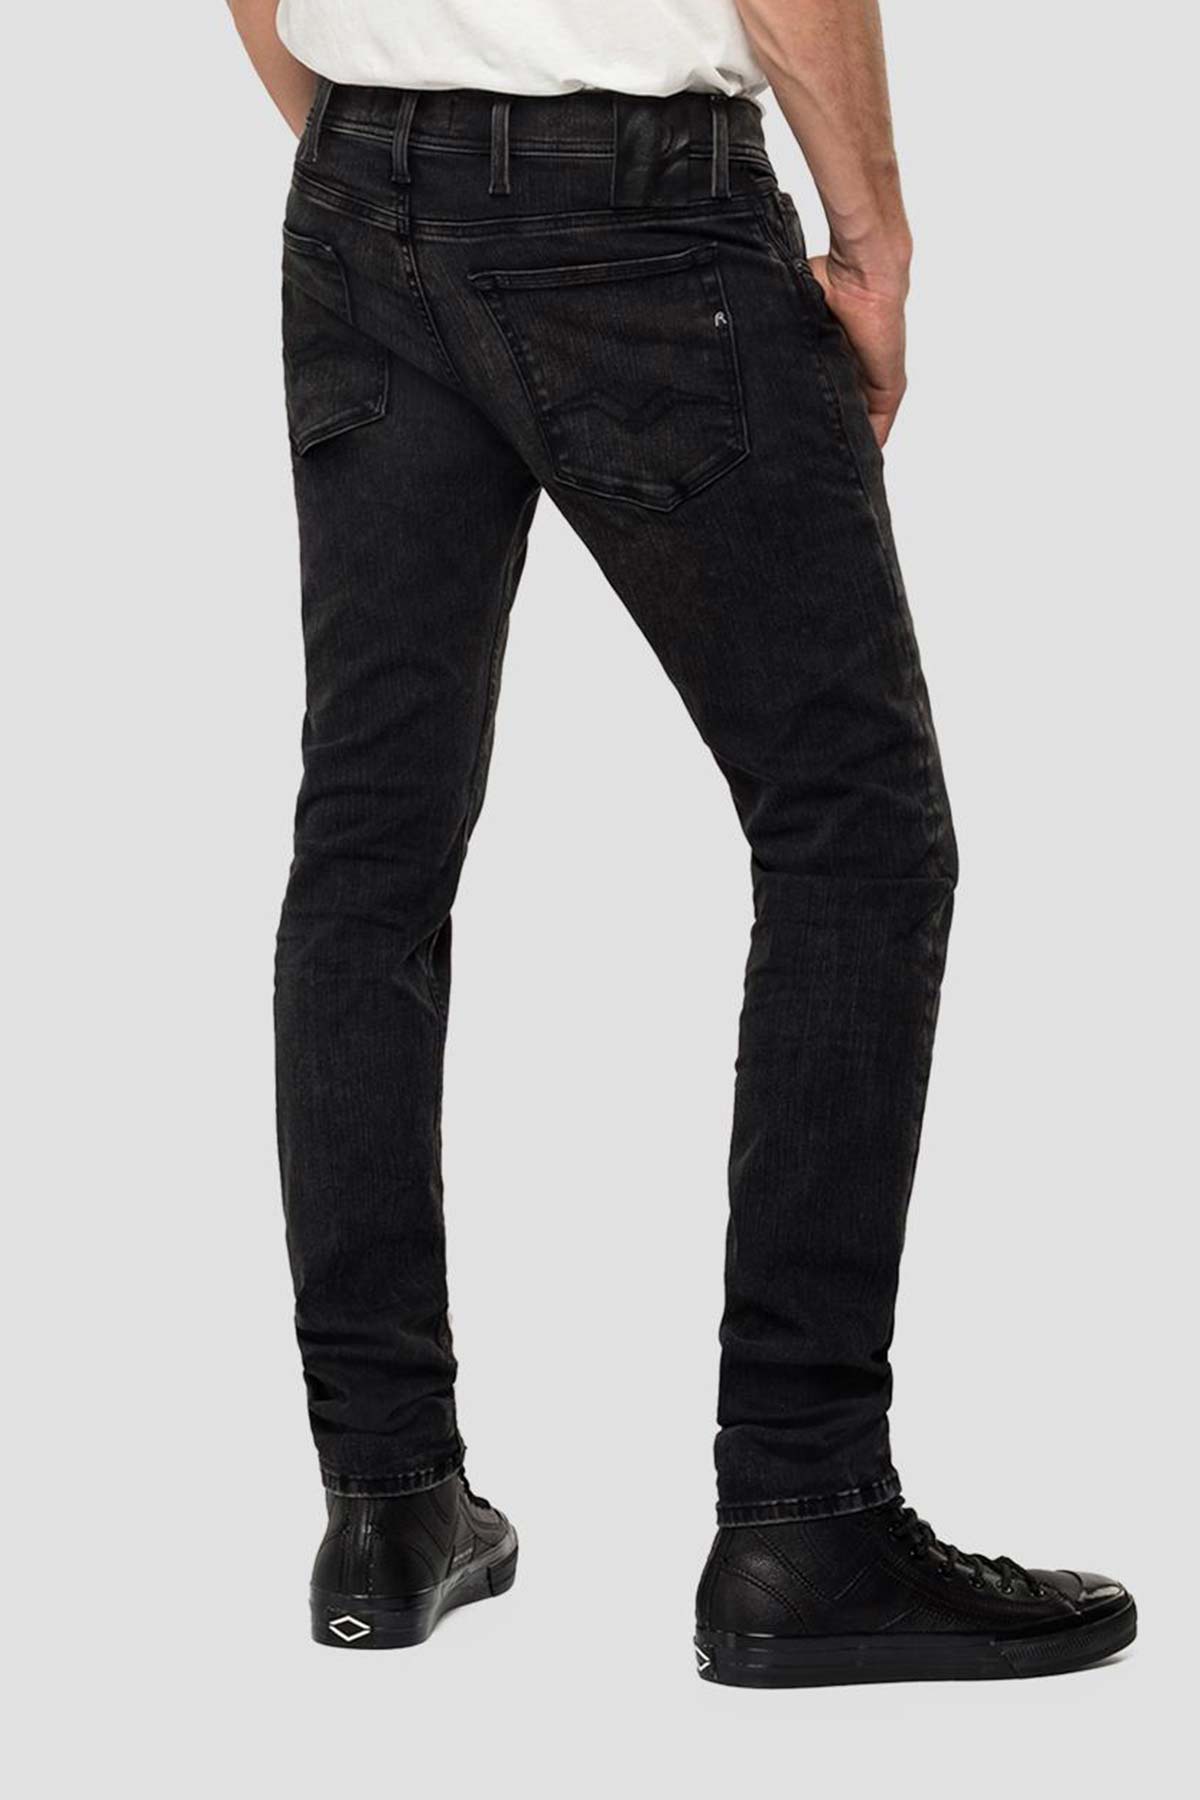 Replay Hyperflex Jondrill Skinny Fit Jeans-Libas Trendy Fashion Store